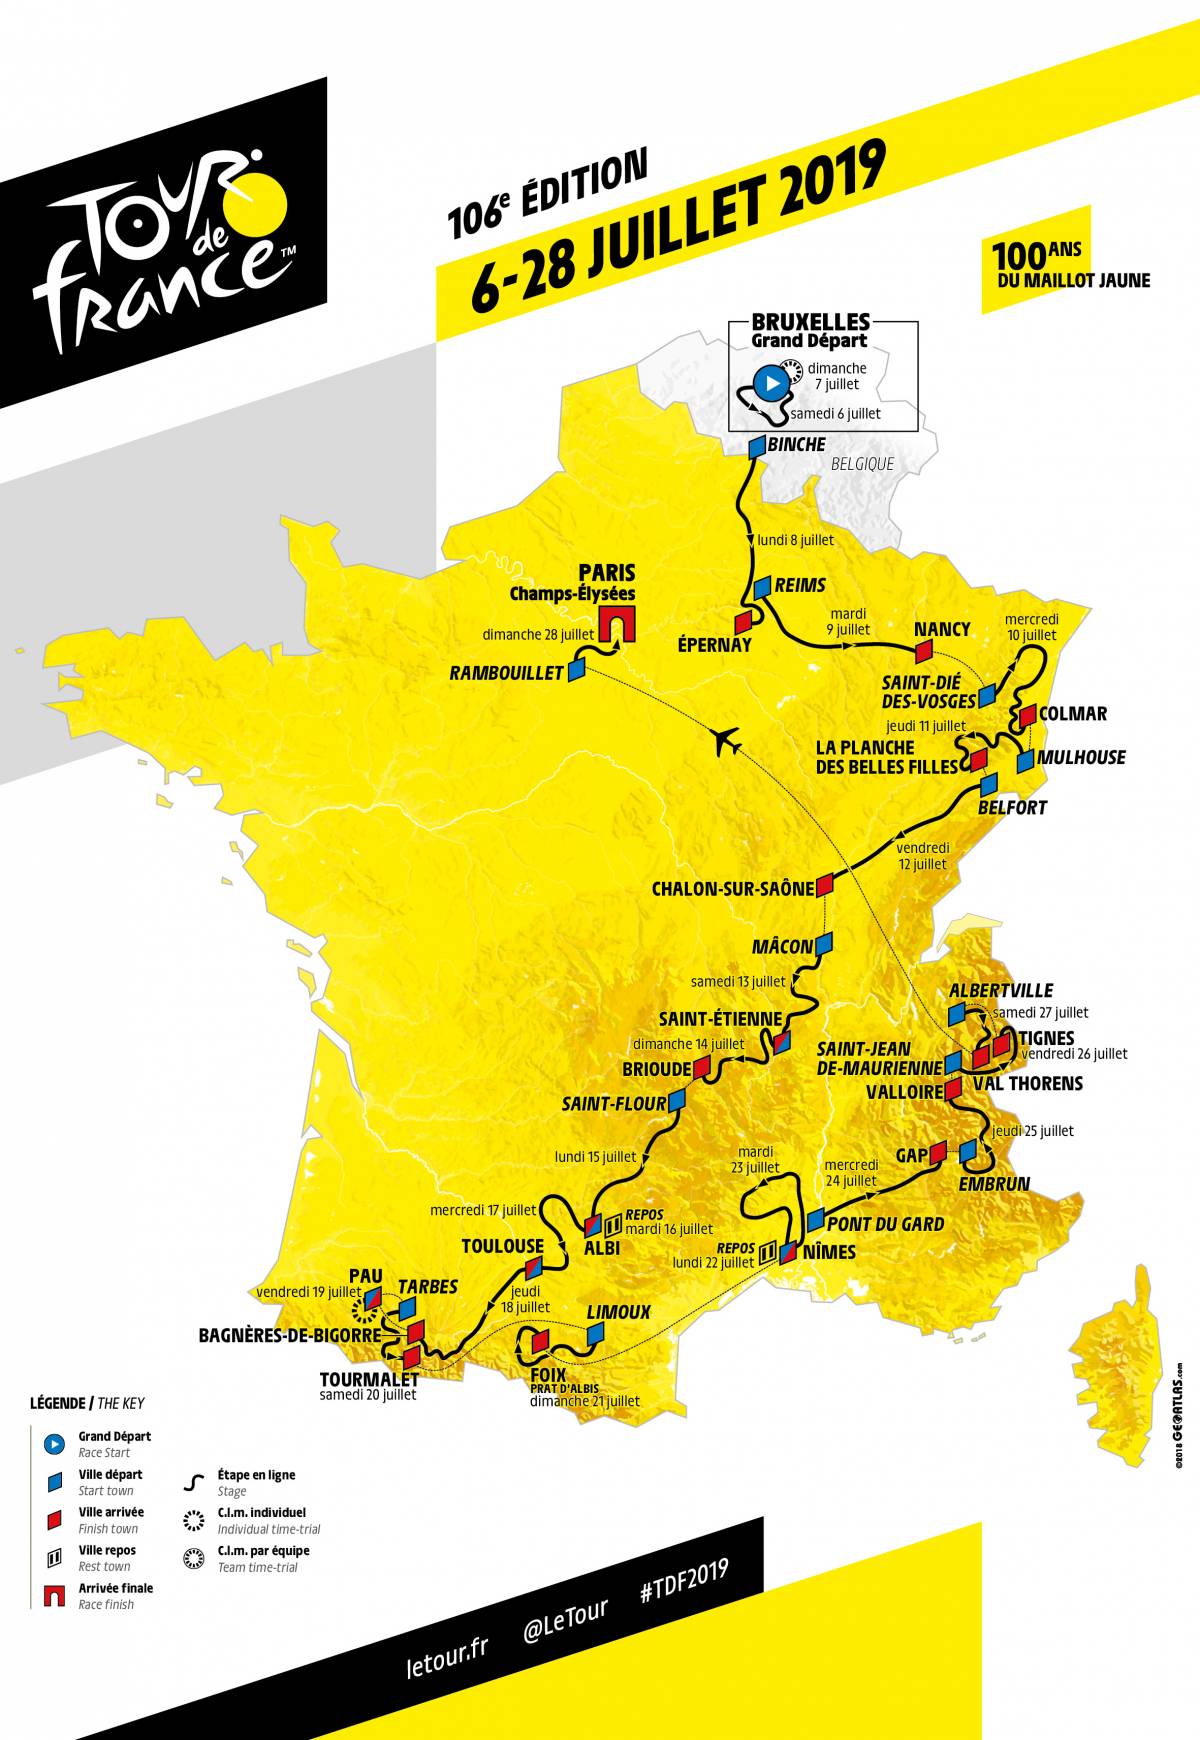 The 2019 Tour de France route has been revealed